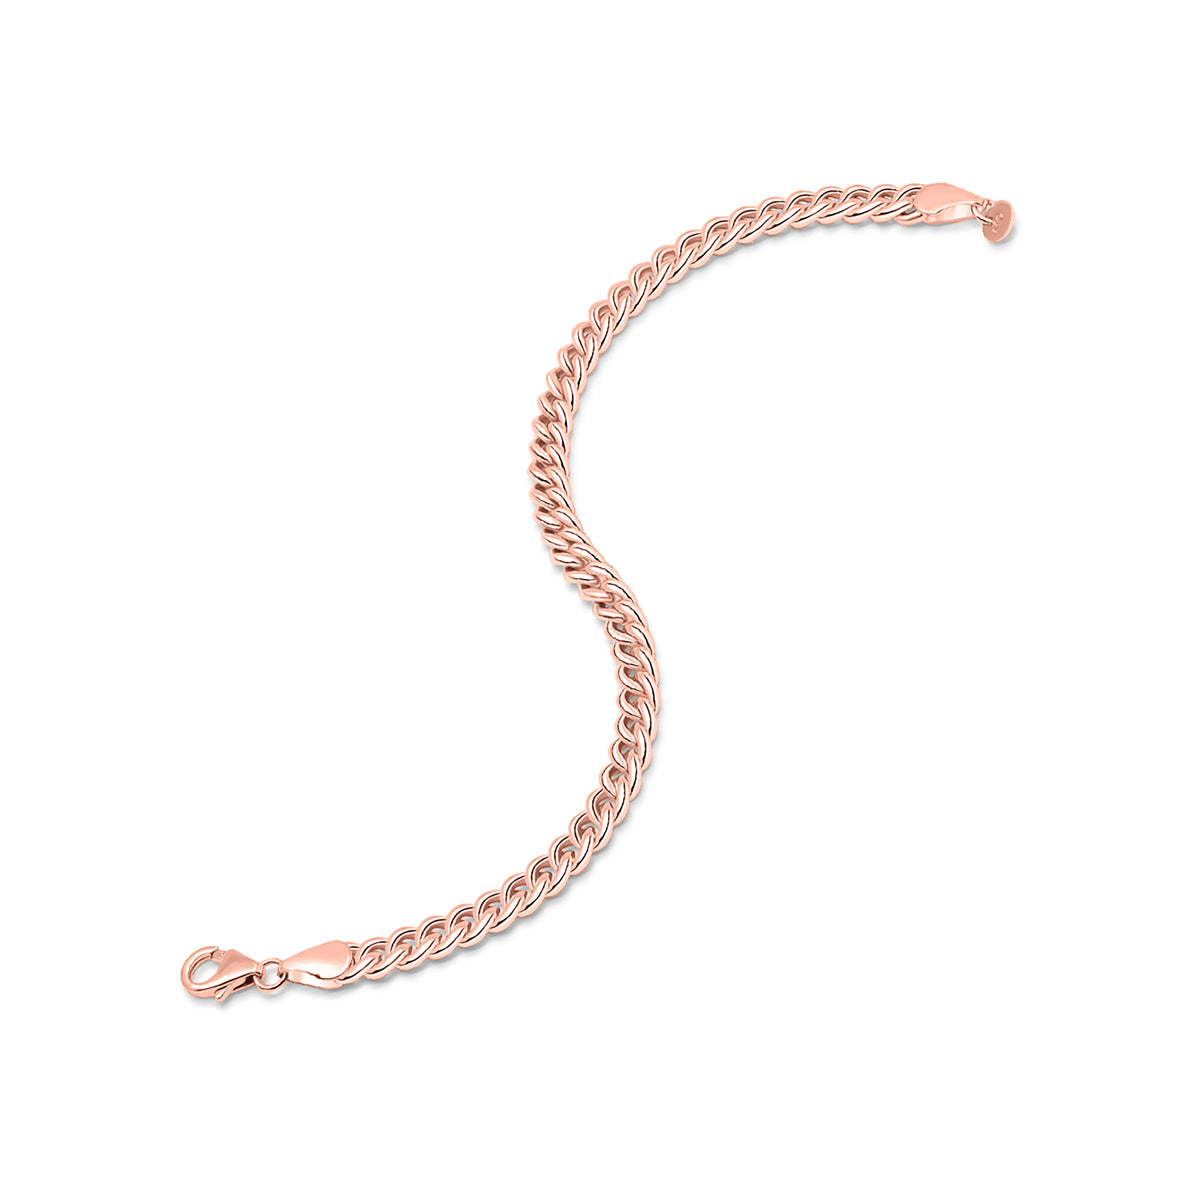 Simple rose gold chain link bracelet